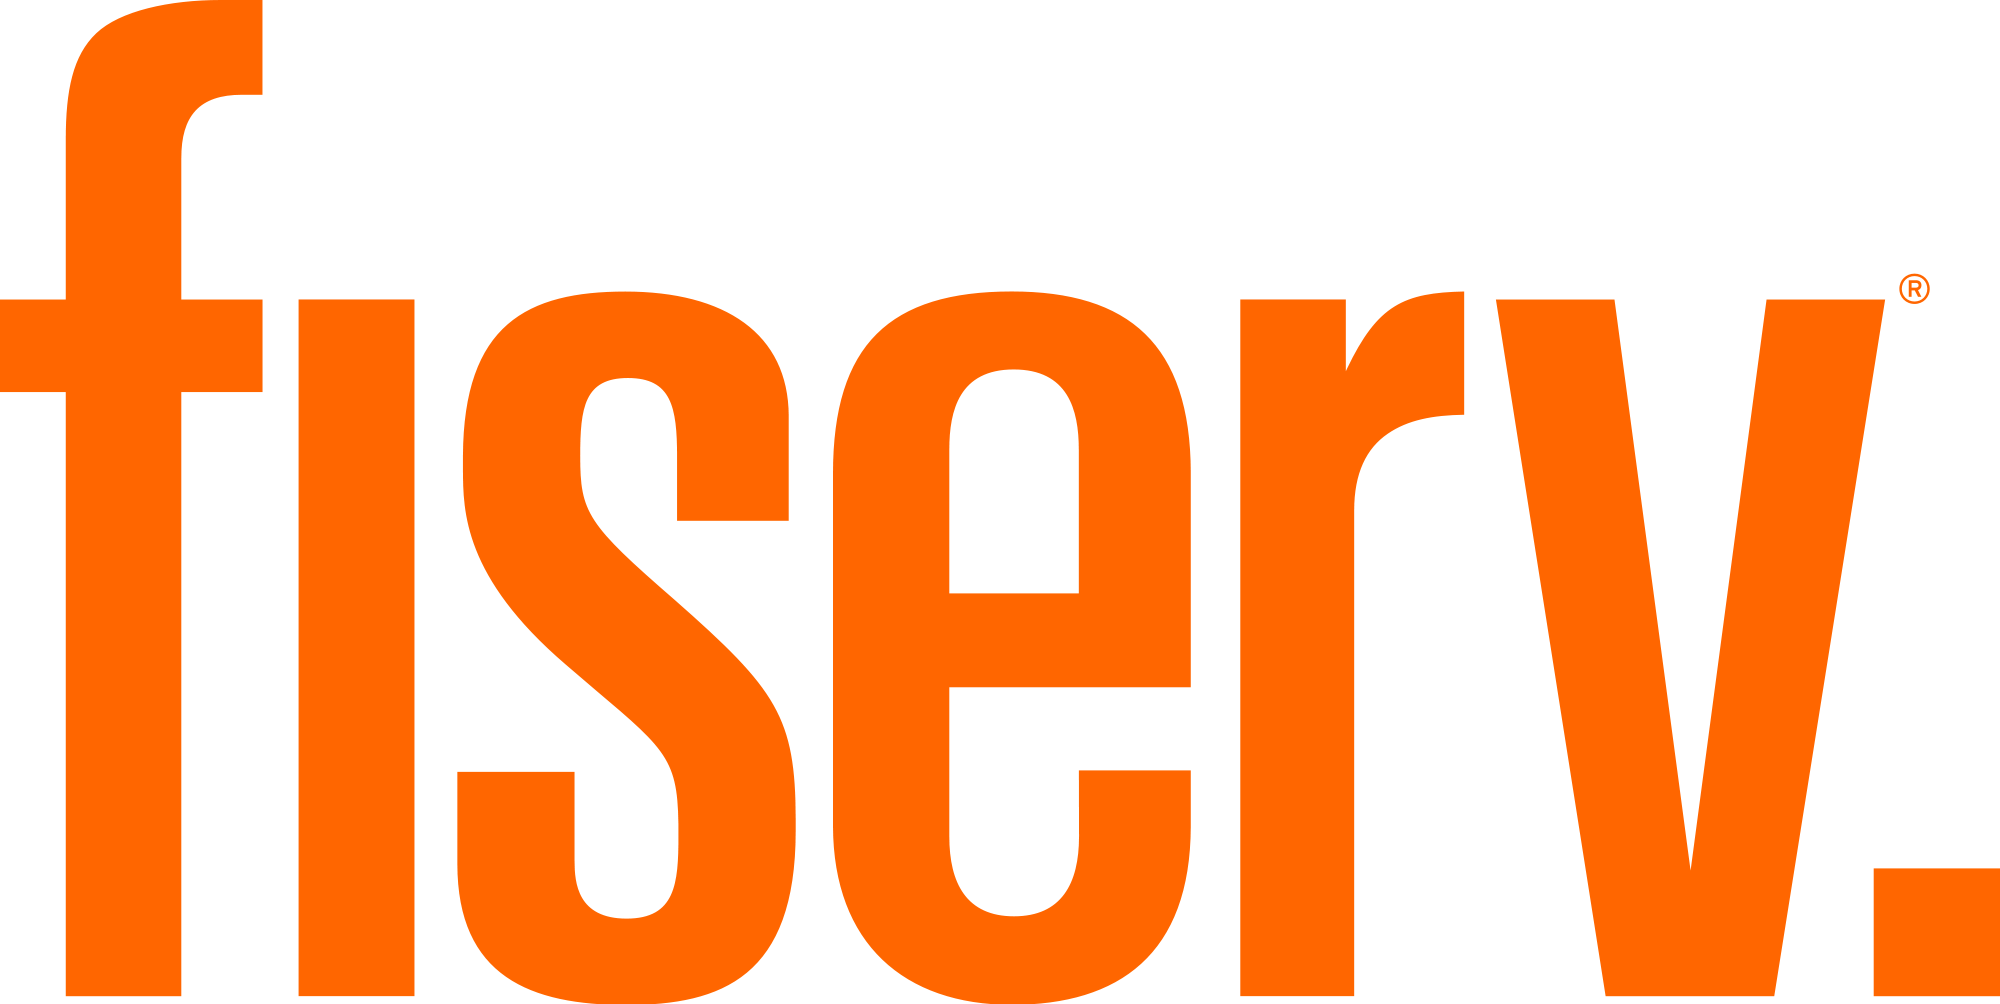 Fiserv Inc Brand Logo